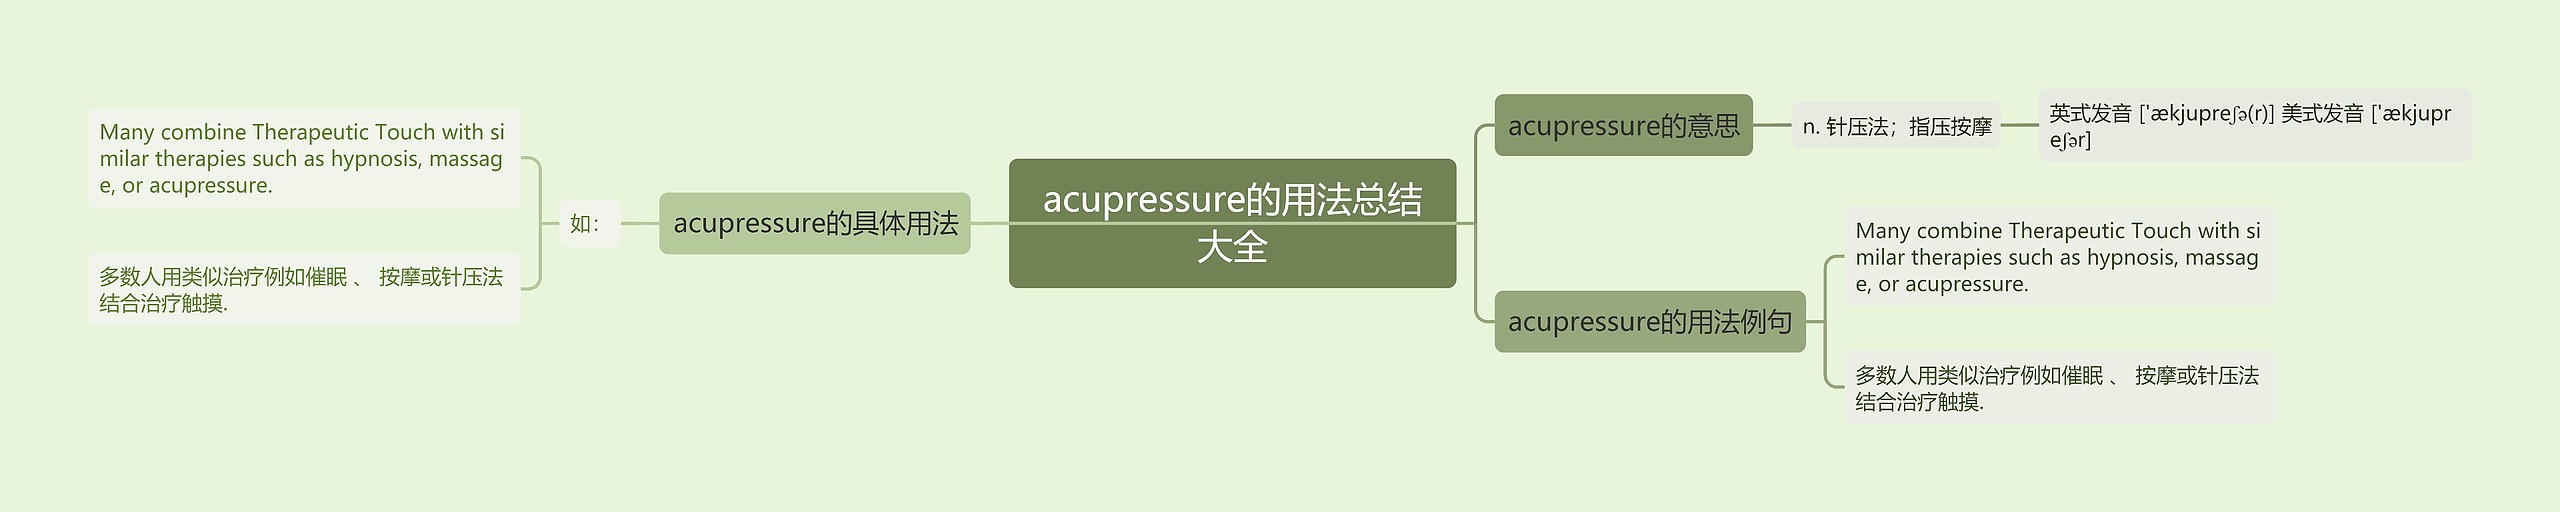 acupressure的用法总结大全思维导图